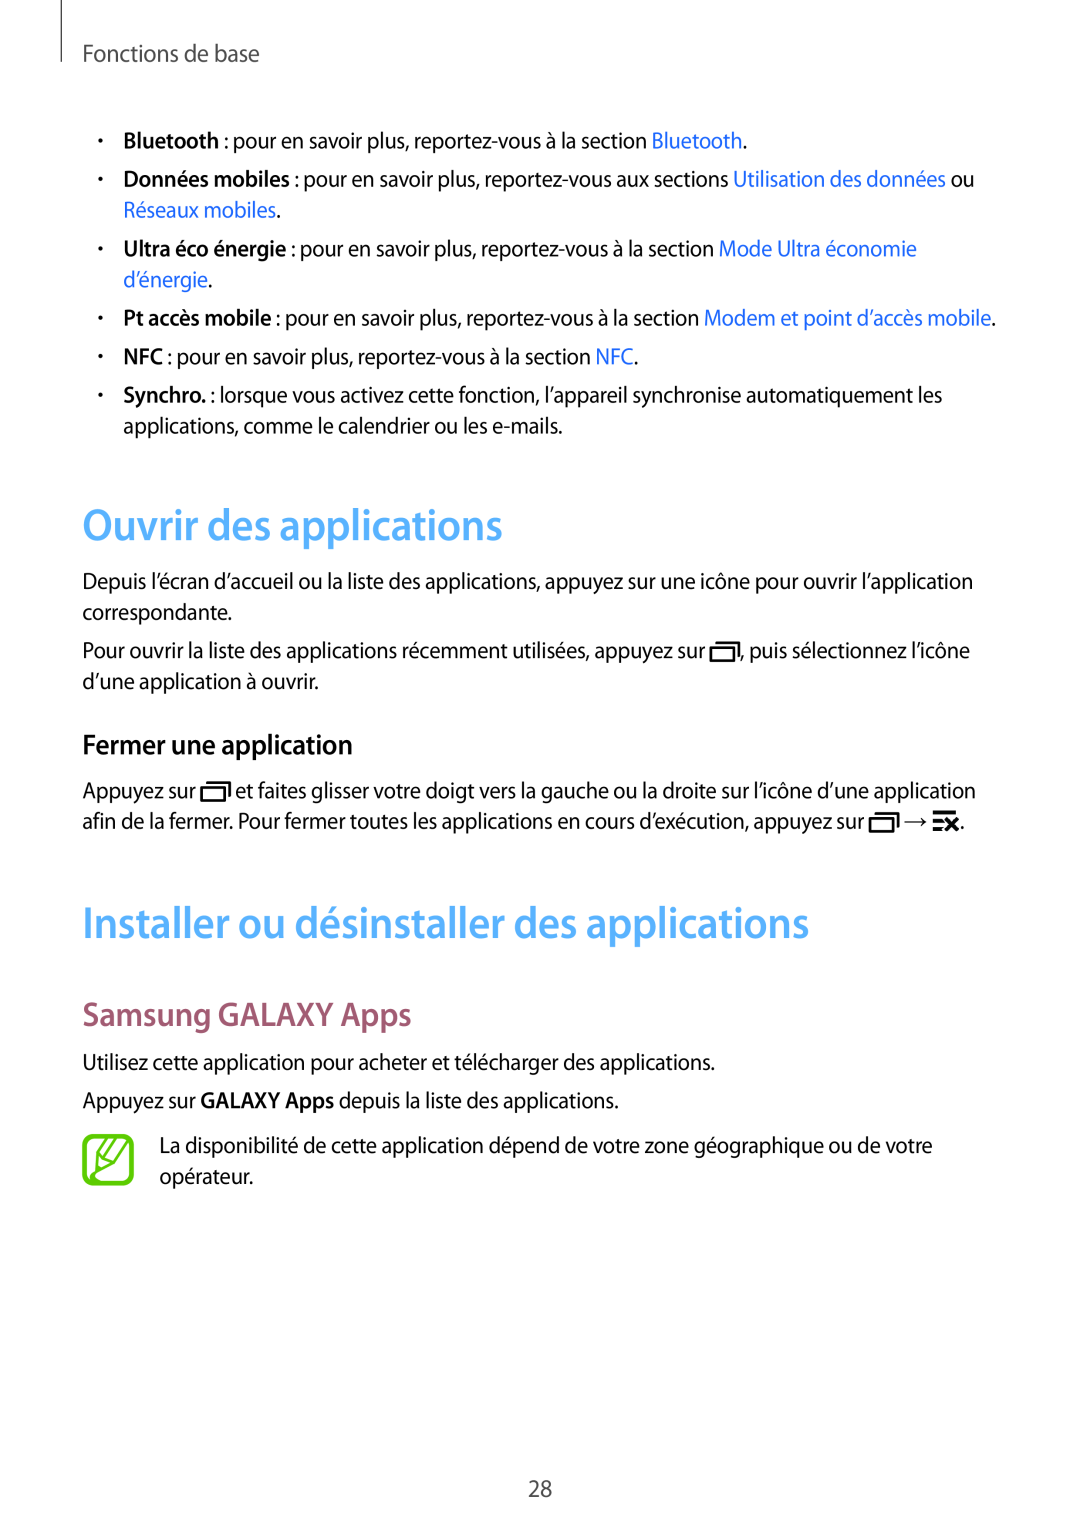 Samsung SM-G357FZAZNRJ manual Ouvrir des applications, Installer ou désinstaller des applications, Samsung GALAXY Apps 